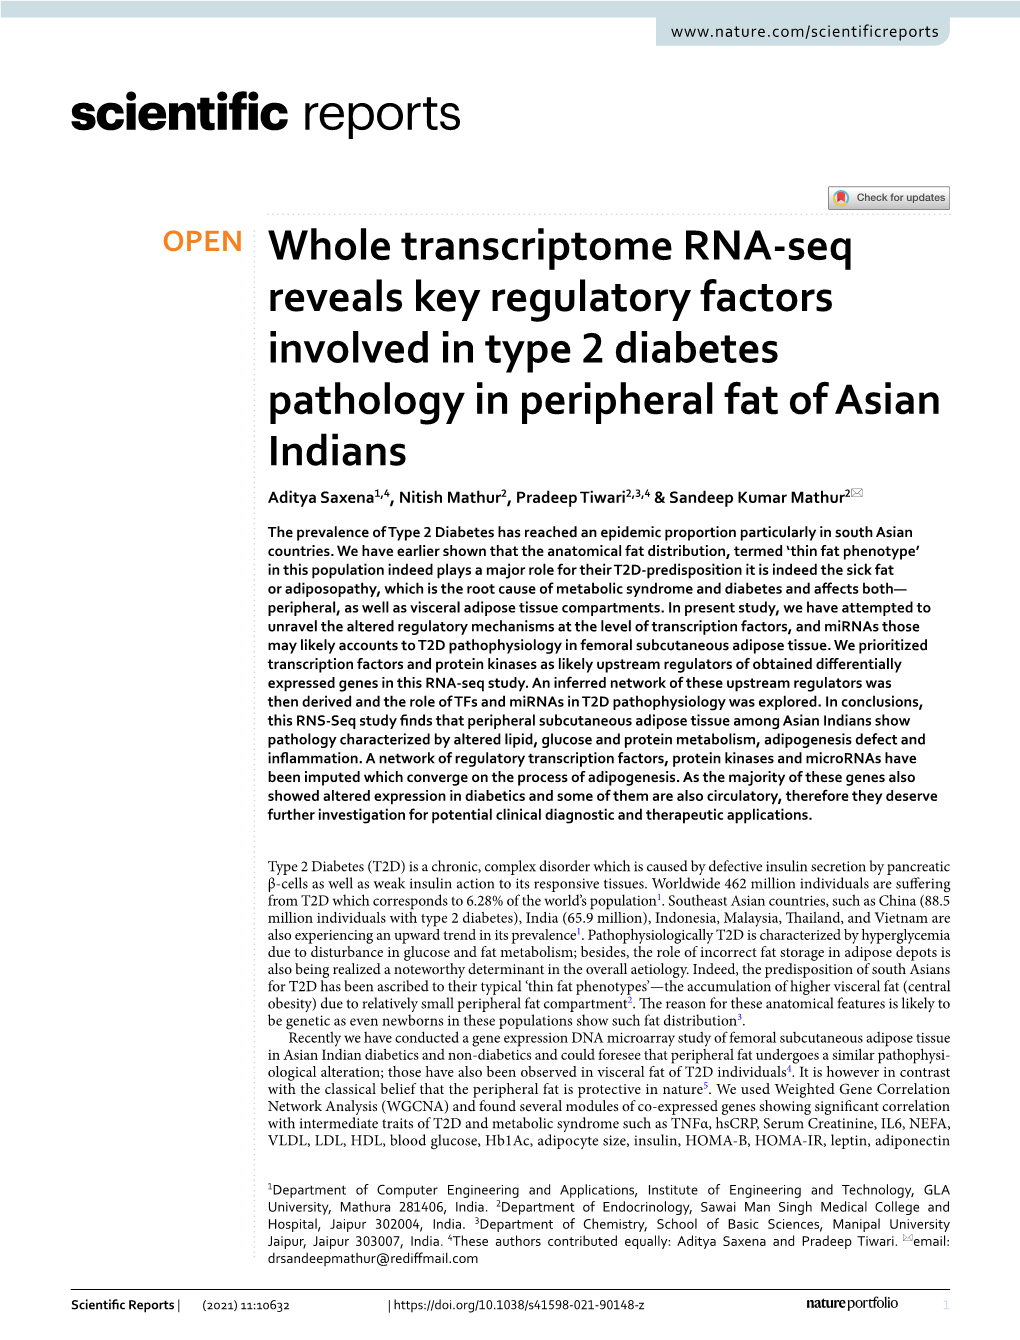 Whole Transcriptome RNA-Seq Reveals Key Regulatory Factors Involved In